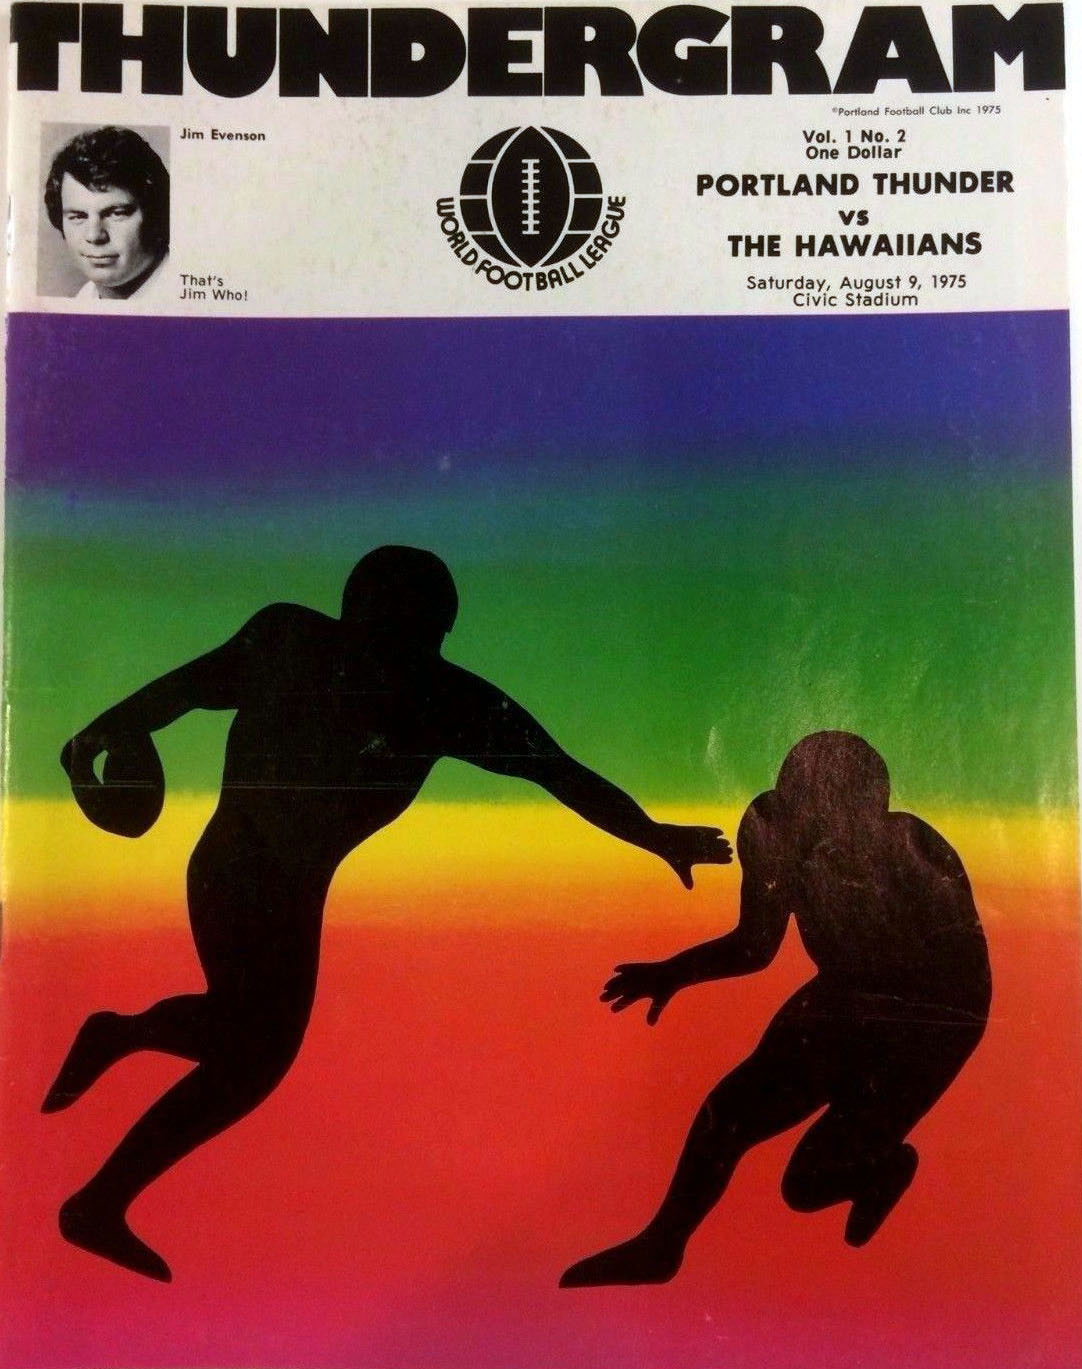 Portland Thunder vs. The Hawaiians (August 9, 1975)